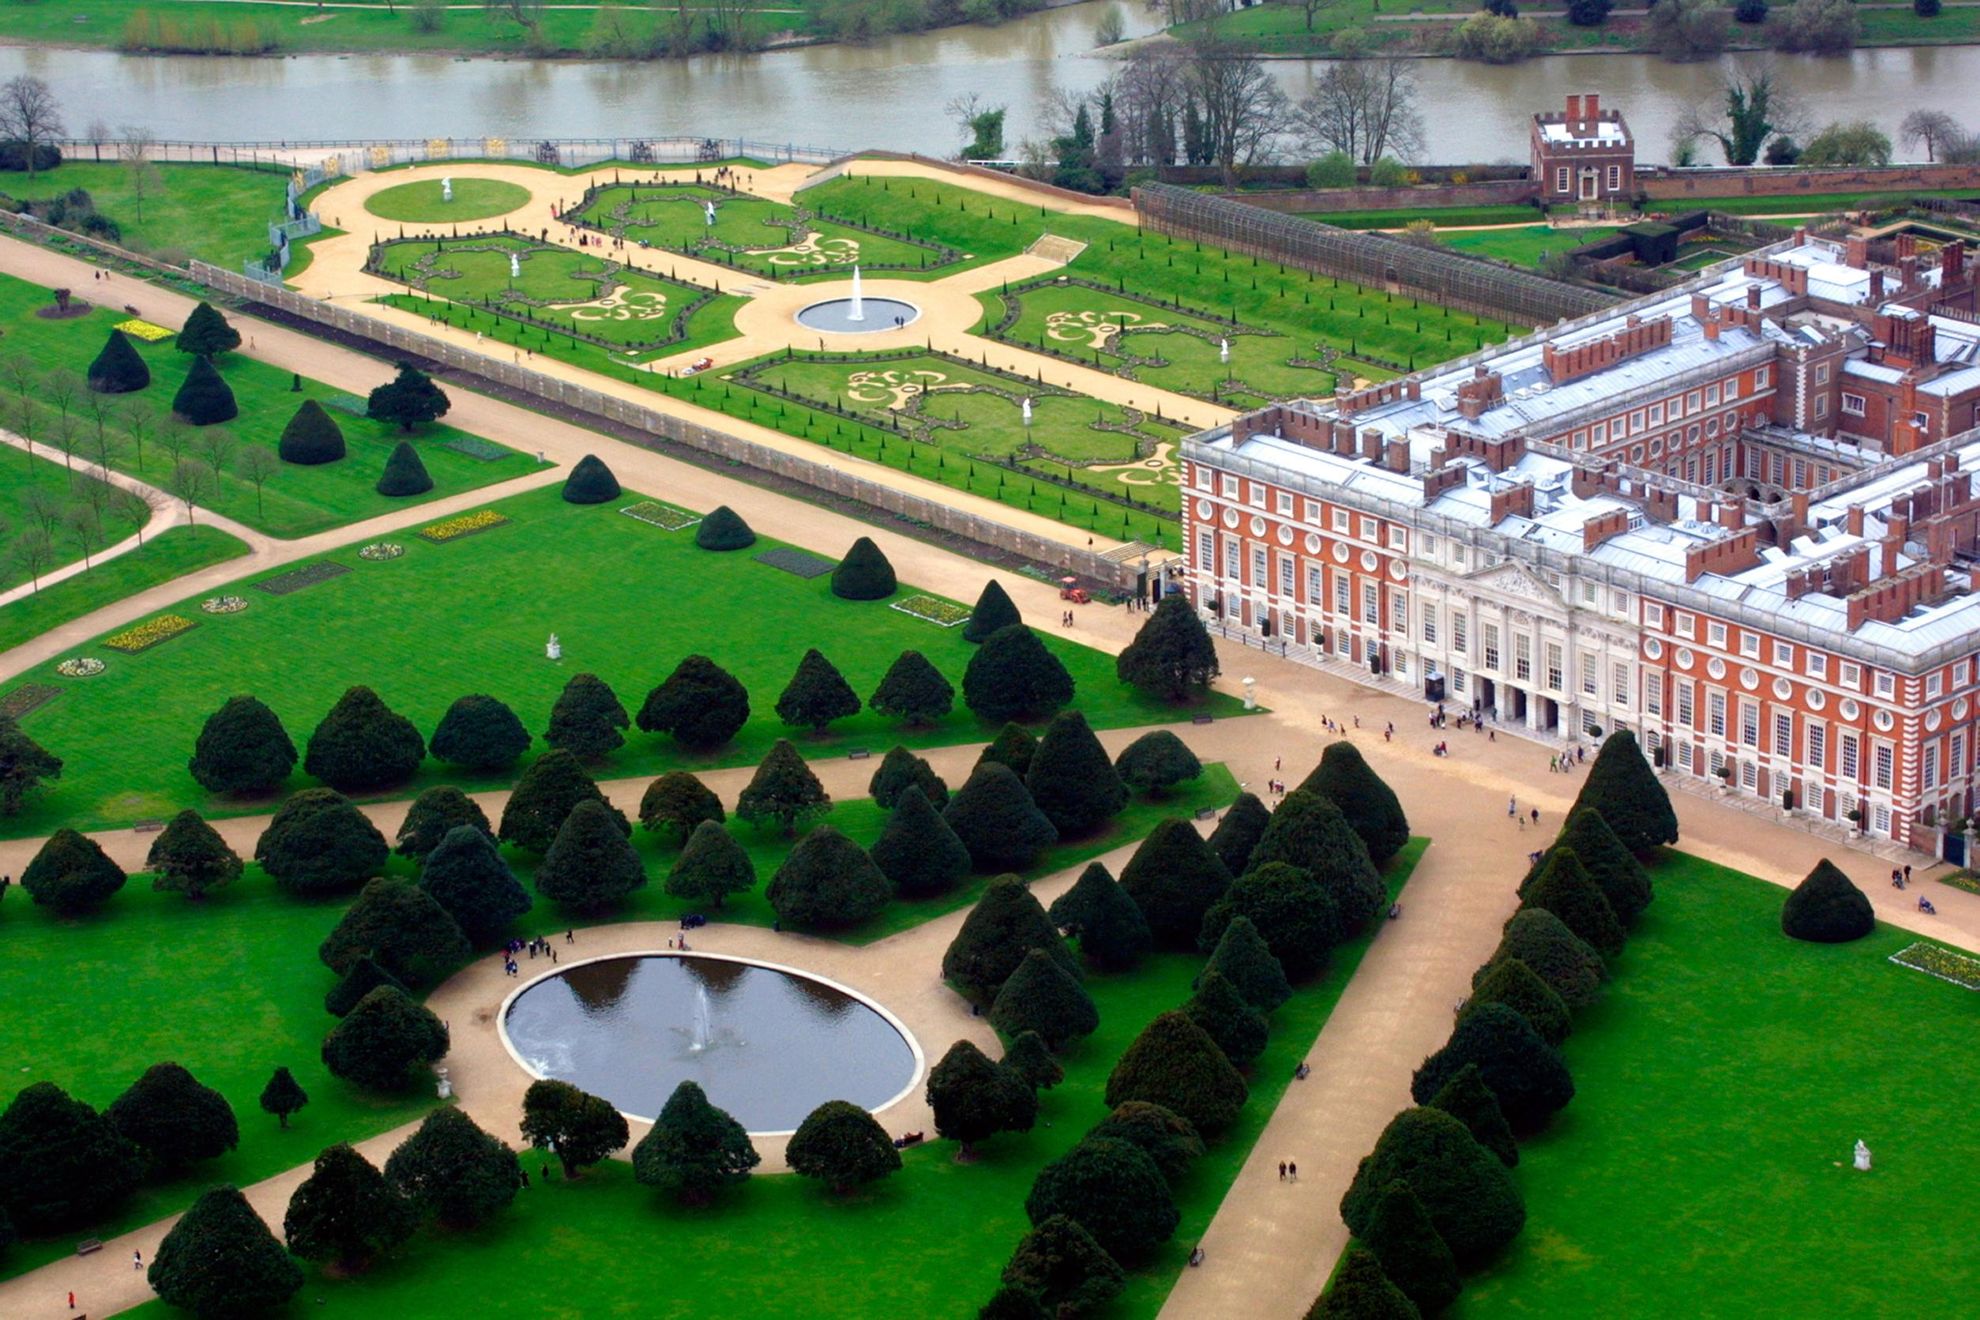 Concours of Elegance 2014 - Hampton Court Palace.